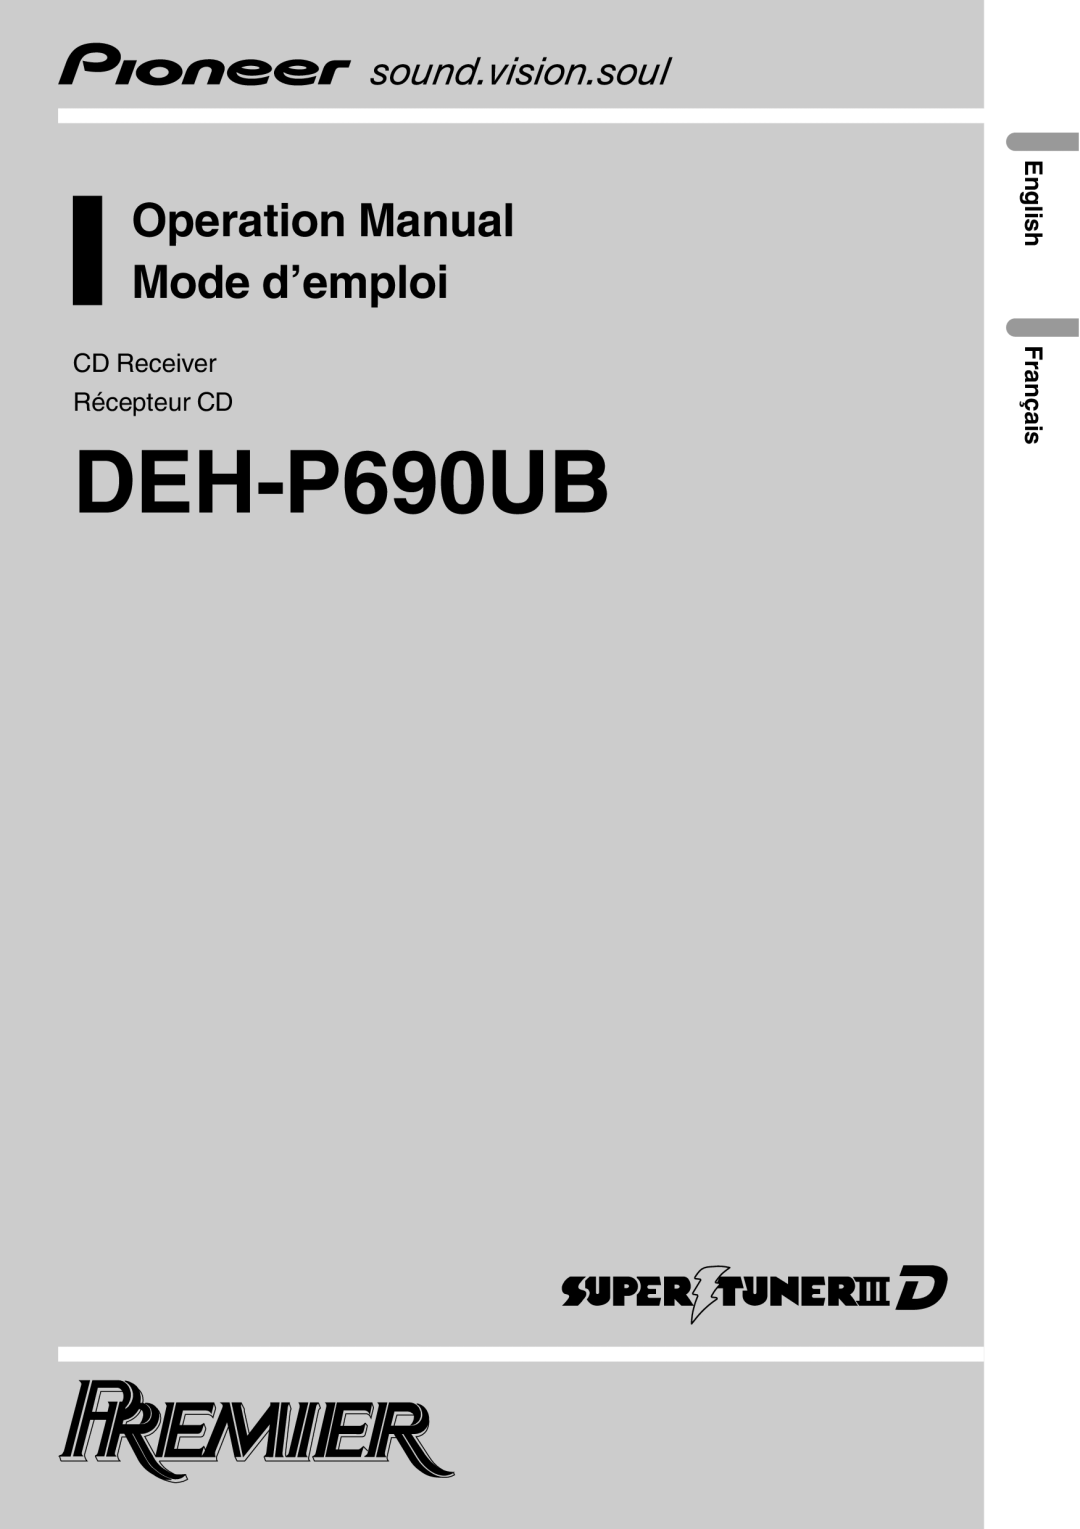 Pioneer DEH-P690UB operation manual CD Receiver Récepteur CD, English Français, Operation Manual Mode d’emploi 